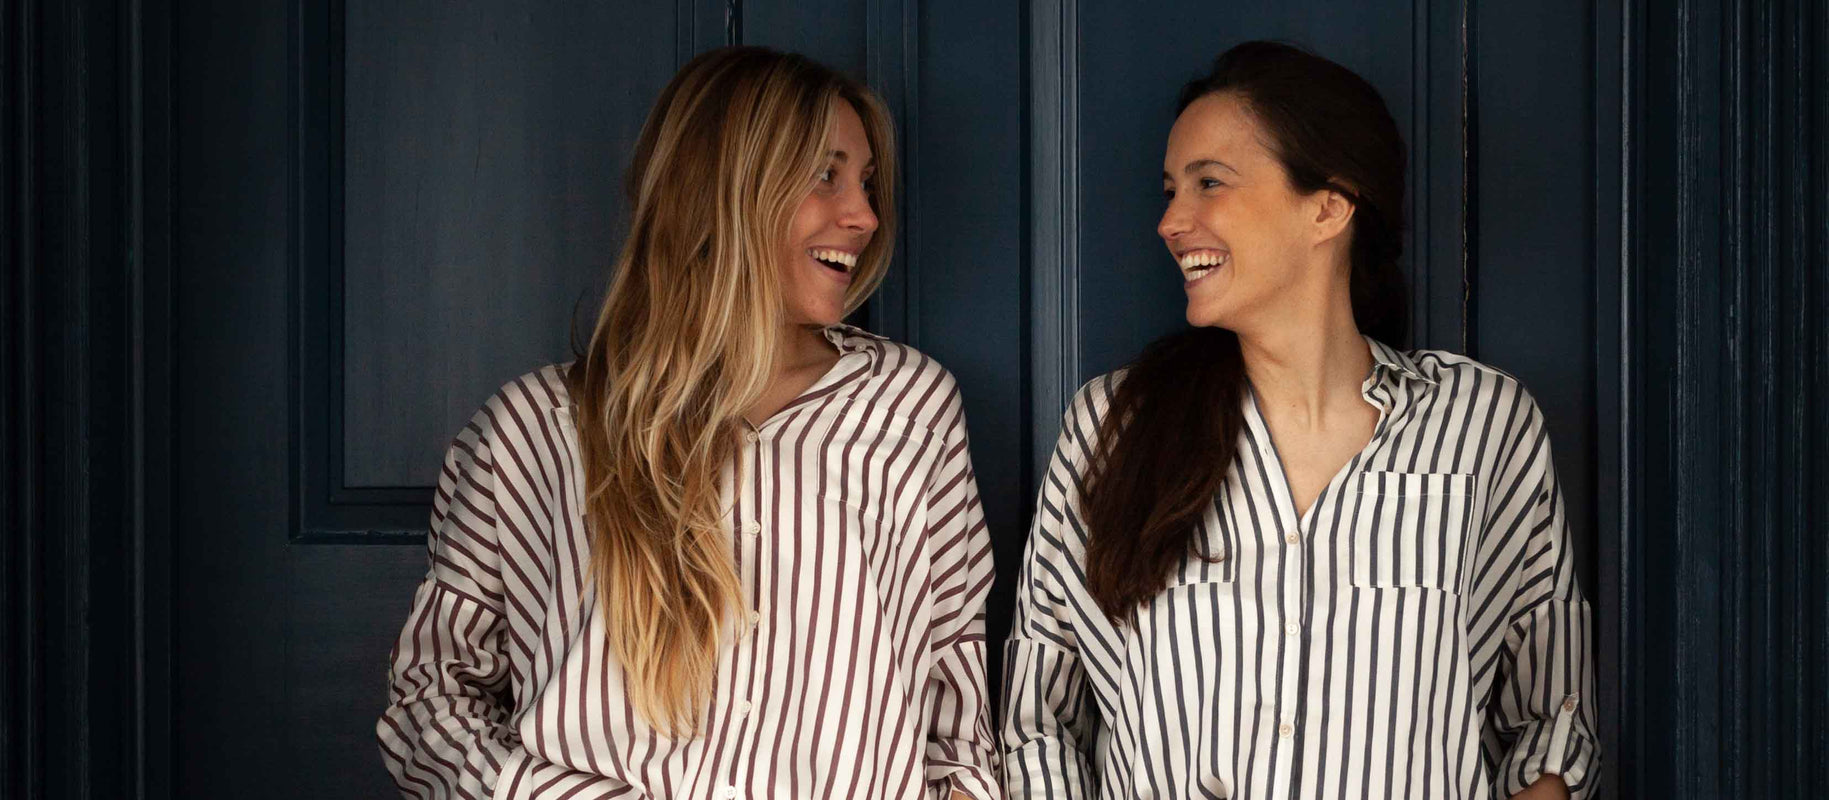 Paola & Giorgia wearing our striped silk blouses